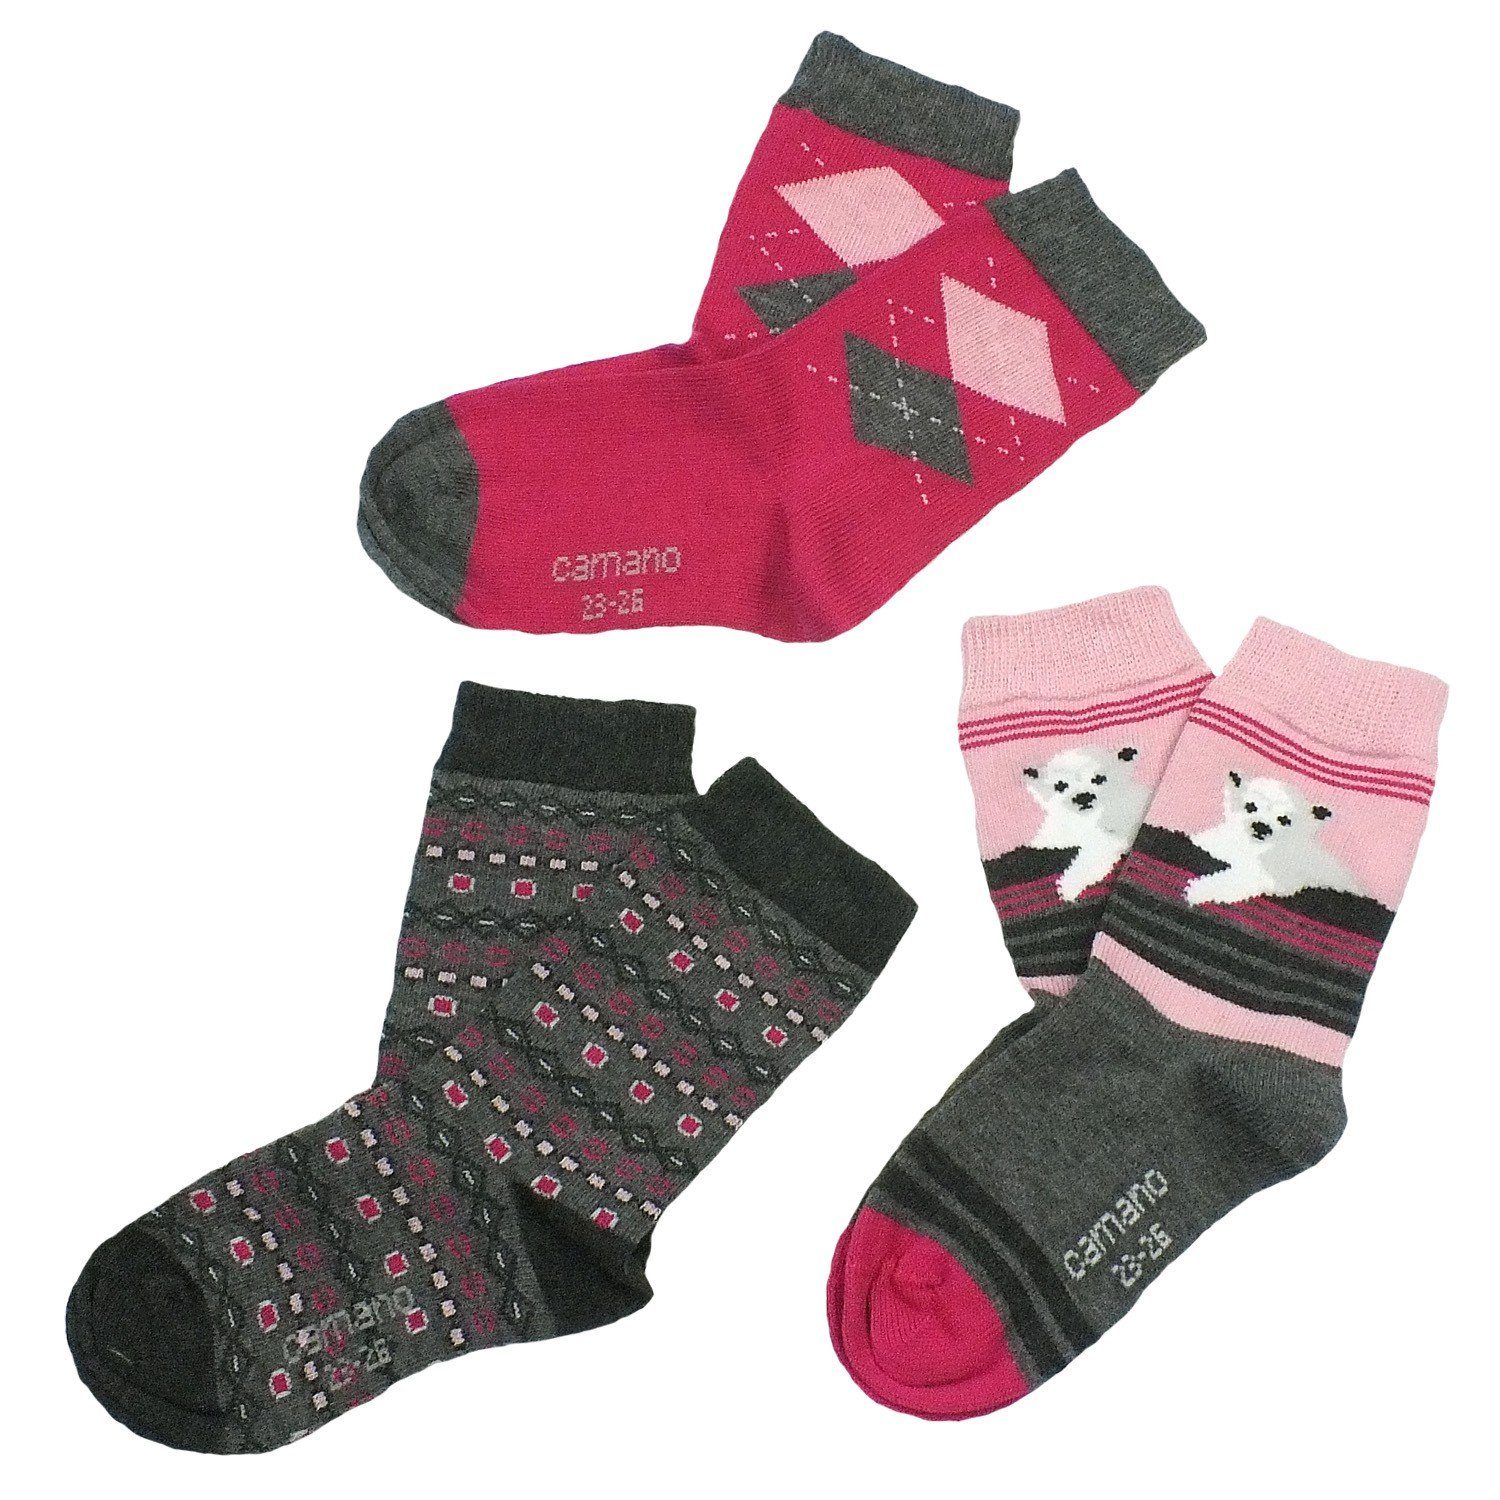 Camano Langsocken CA3821 (Packung, 3 Paar) Kinder Socken, Jungen & Mädchen mit Baumwolle, Kindersocken